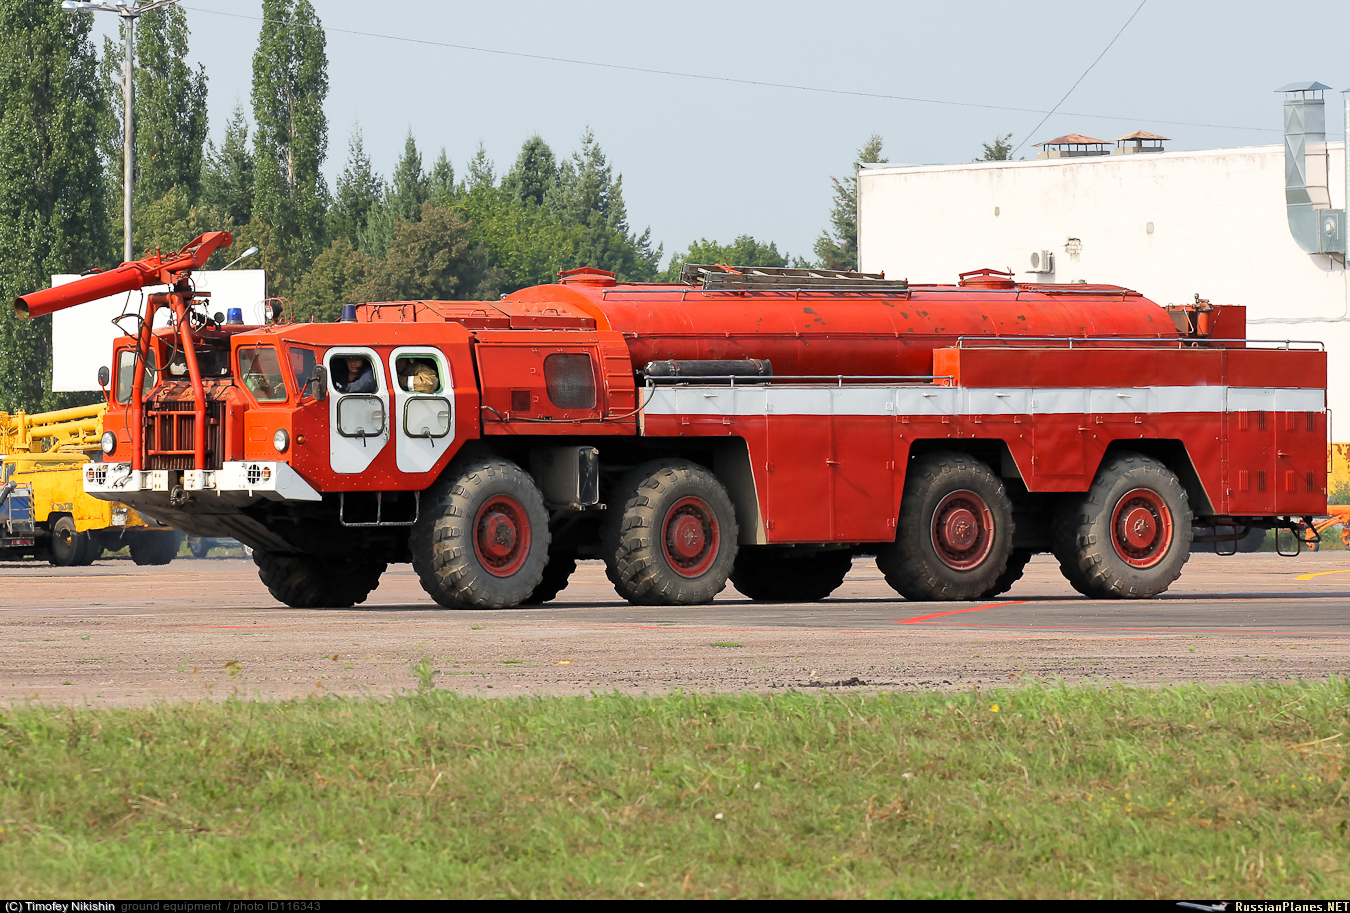 Пожарный автомобиль баз. АА-60 (МАЗ 7313). МАЗ-7310 АА-60 пожарный. МАЗ-543 ураган АА 60. Ураган МАЗ 543 пожарный.